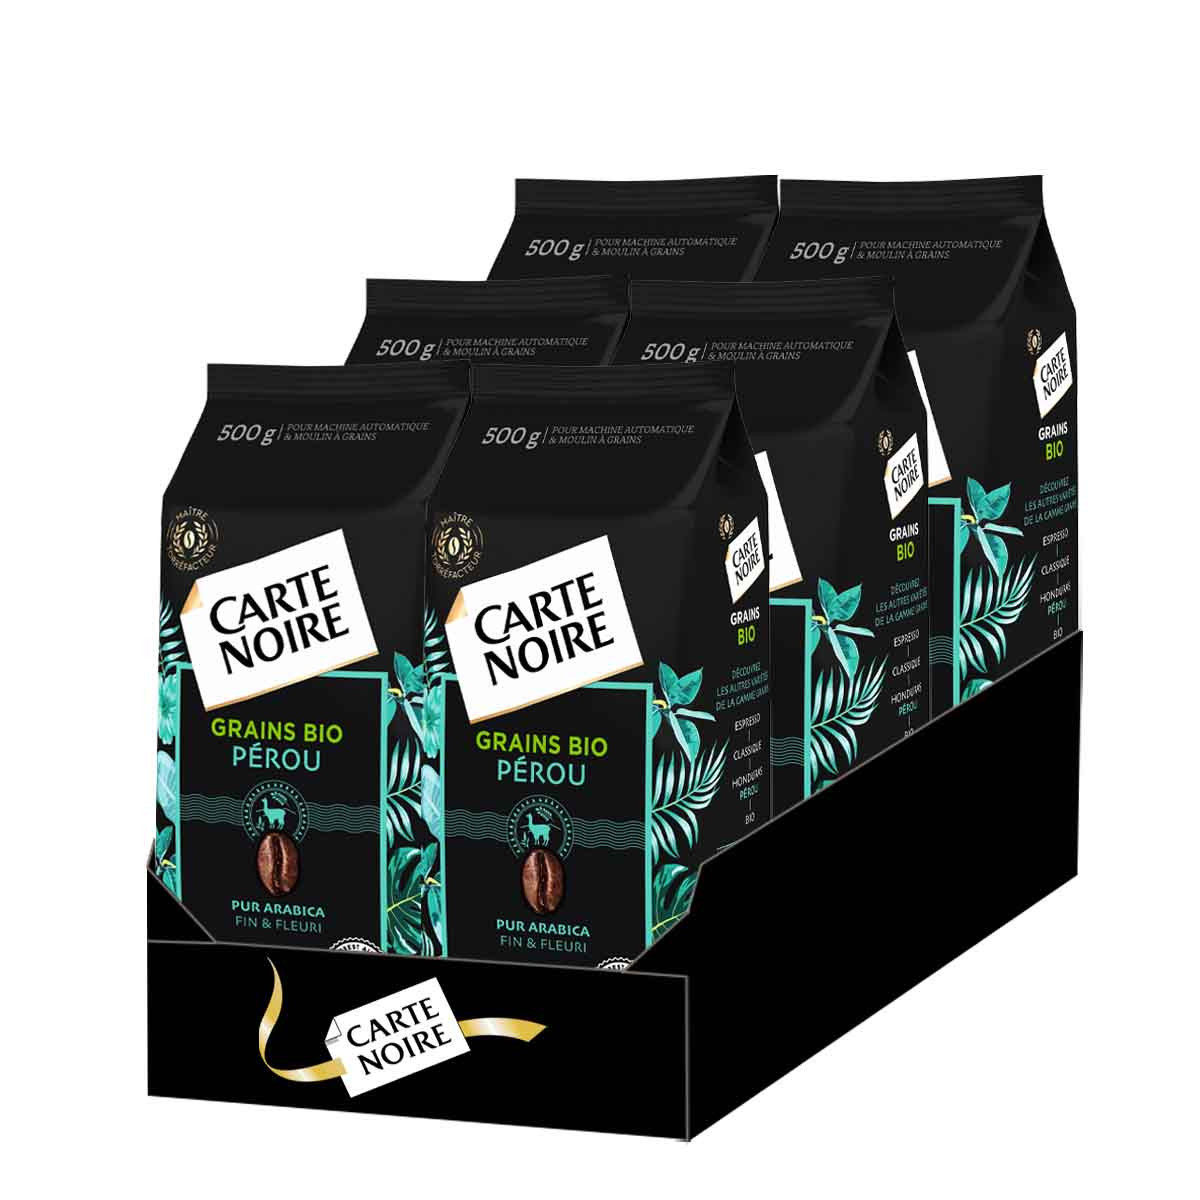 CARTE NOIRE - Café Grain Carte Noire Espresso - 100 % Arabica